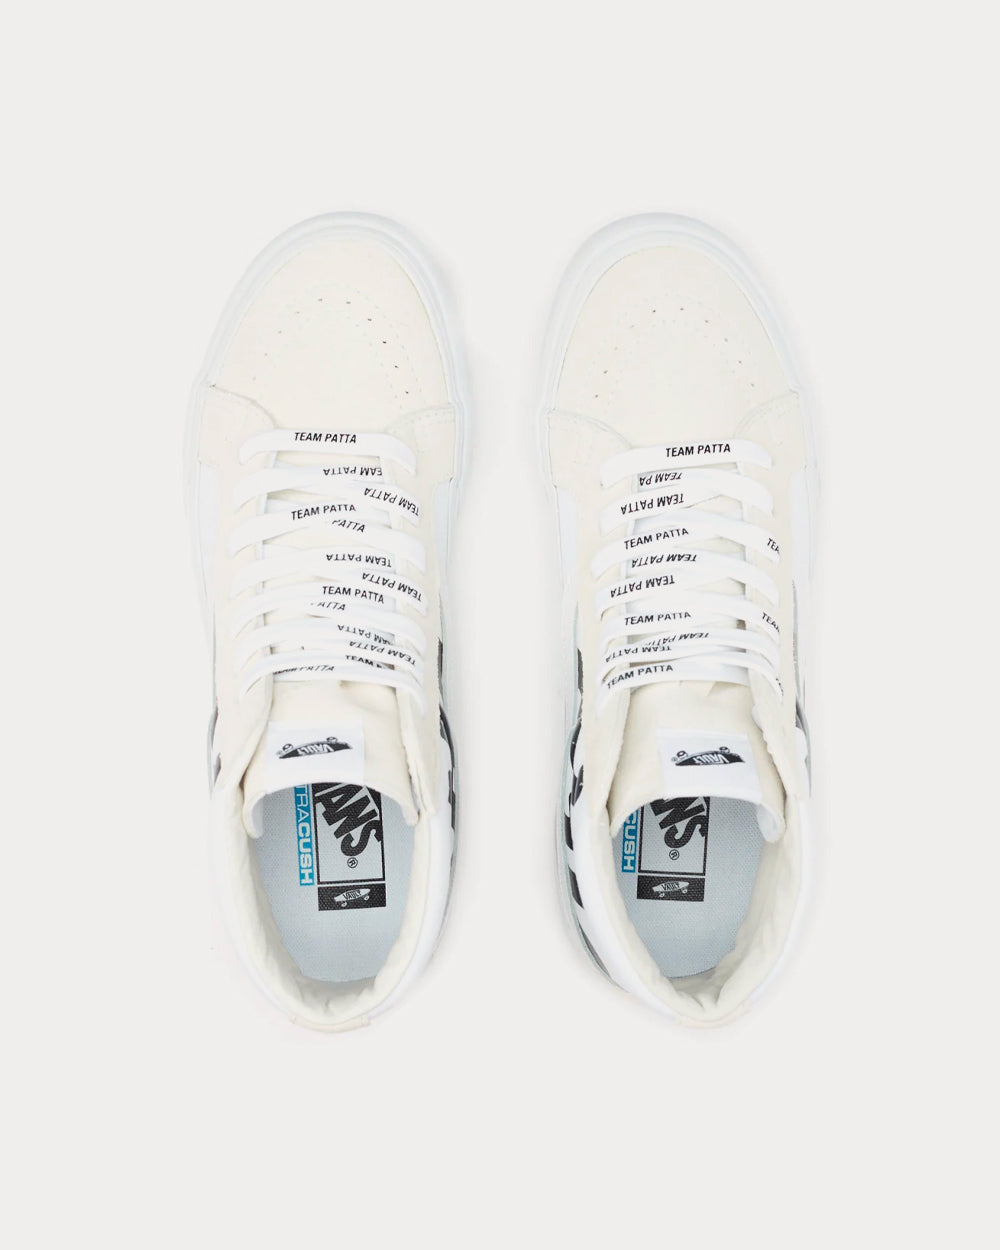 Vans x Patta SK8-Hi Reissue VLT LX White High Top Sneakers - Sneak in Peace